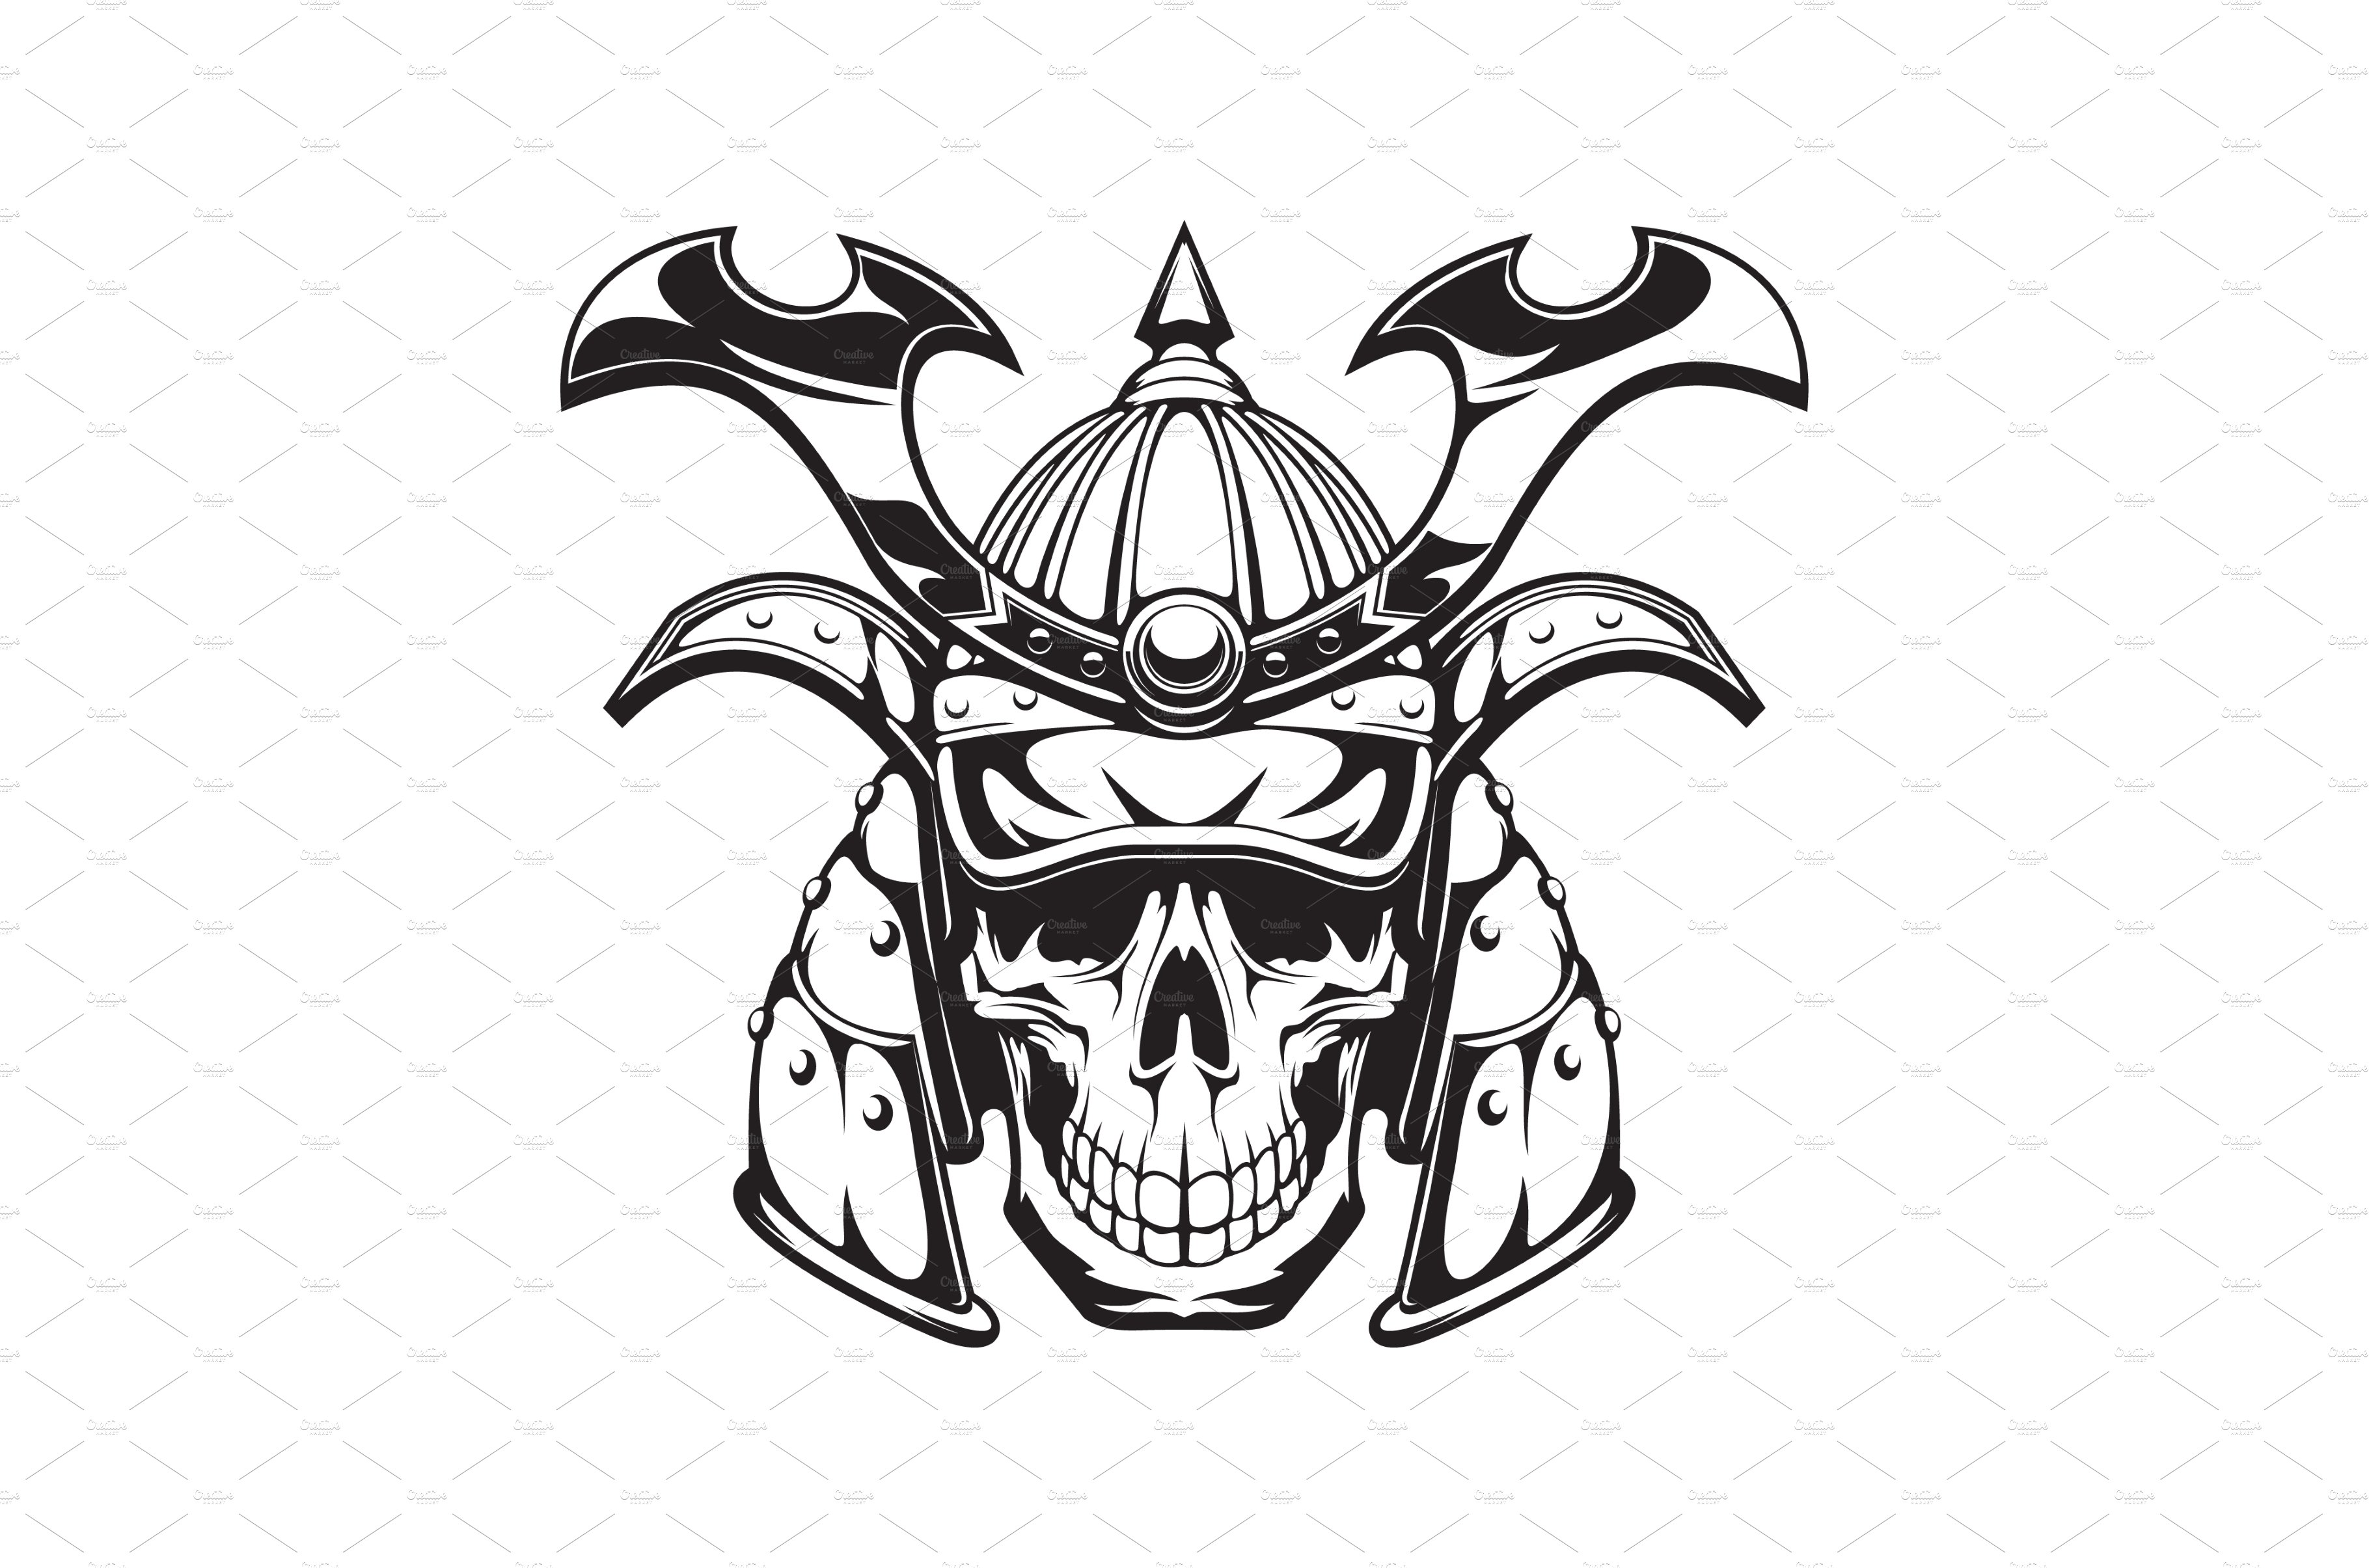 Samurai warrior skull tattoo cover image.